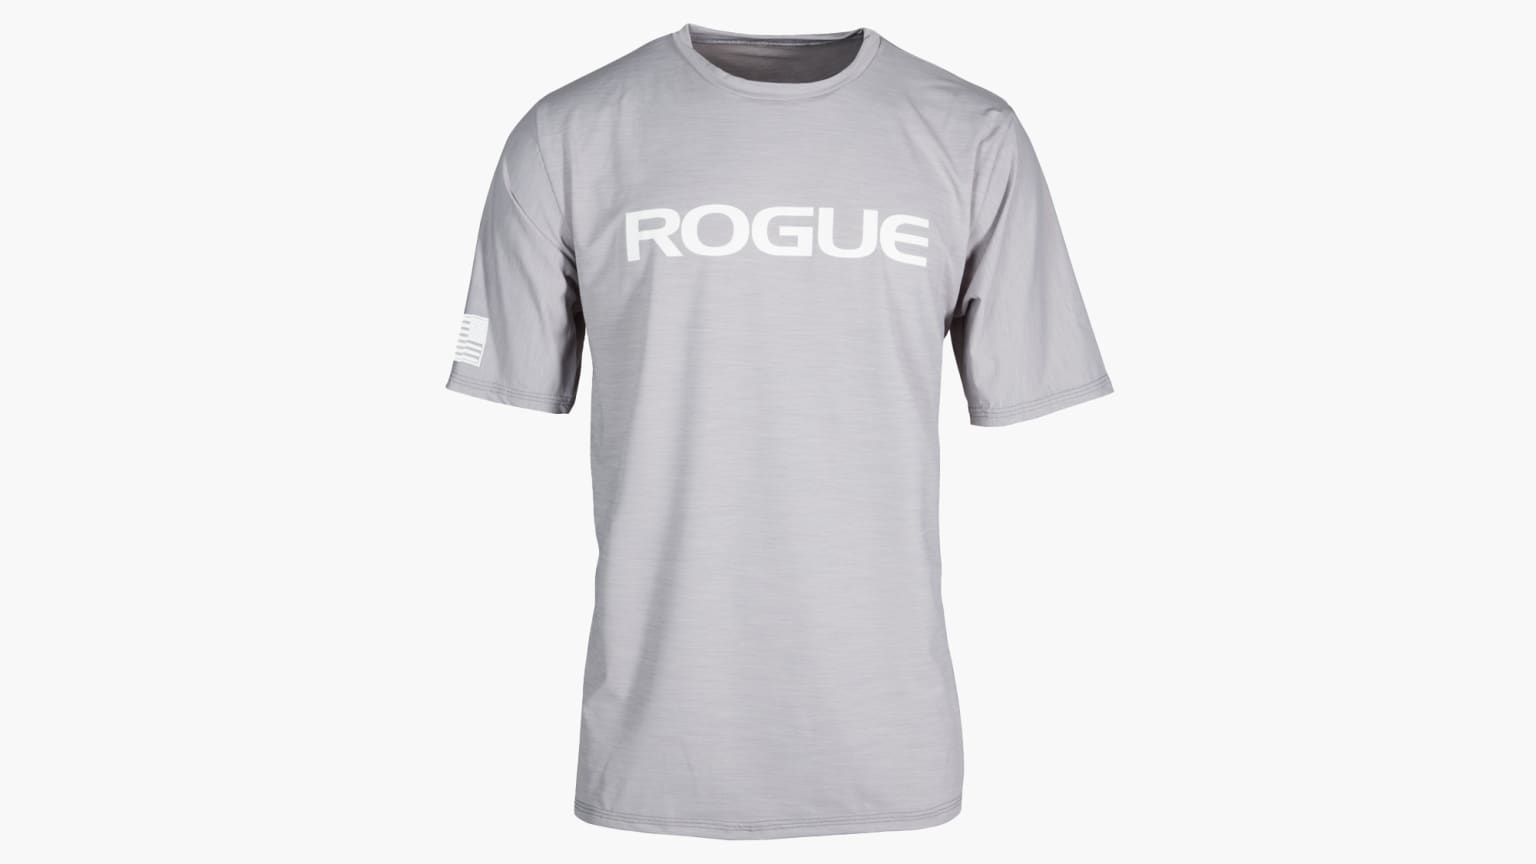 Rogue Men's Performance Sun Shirt - Gray